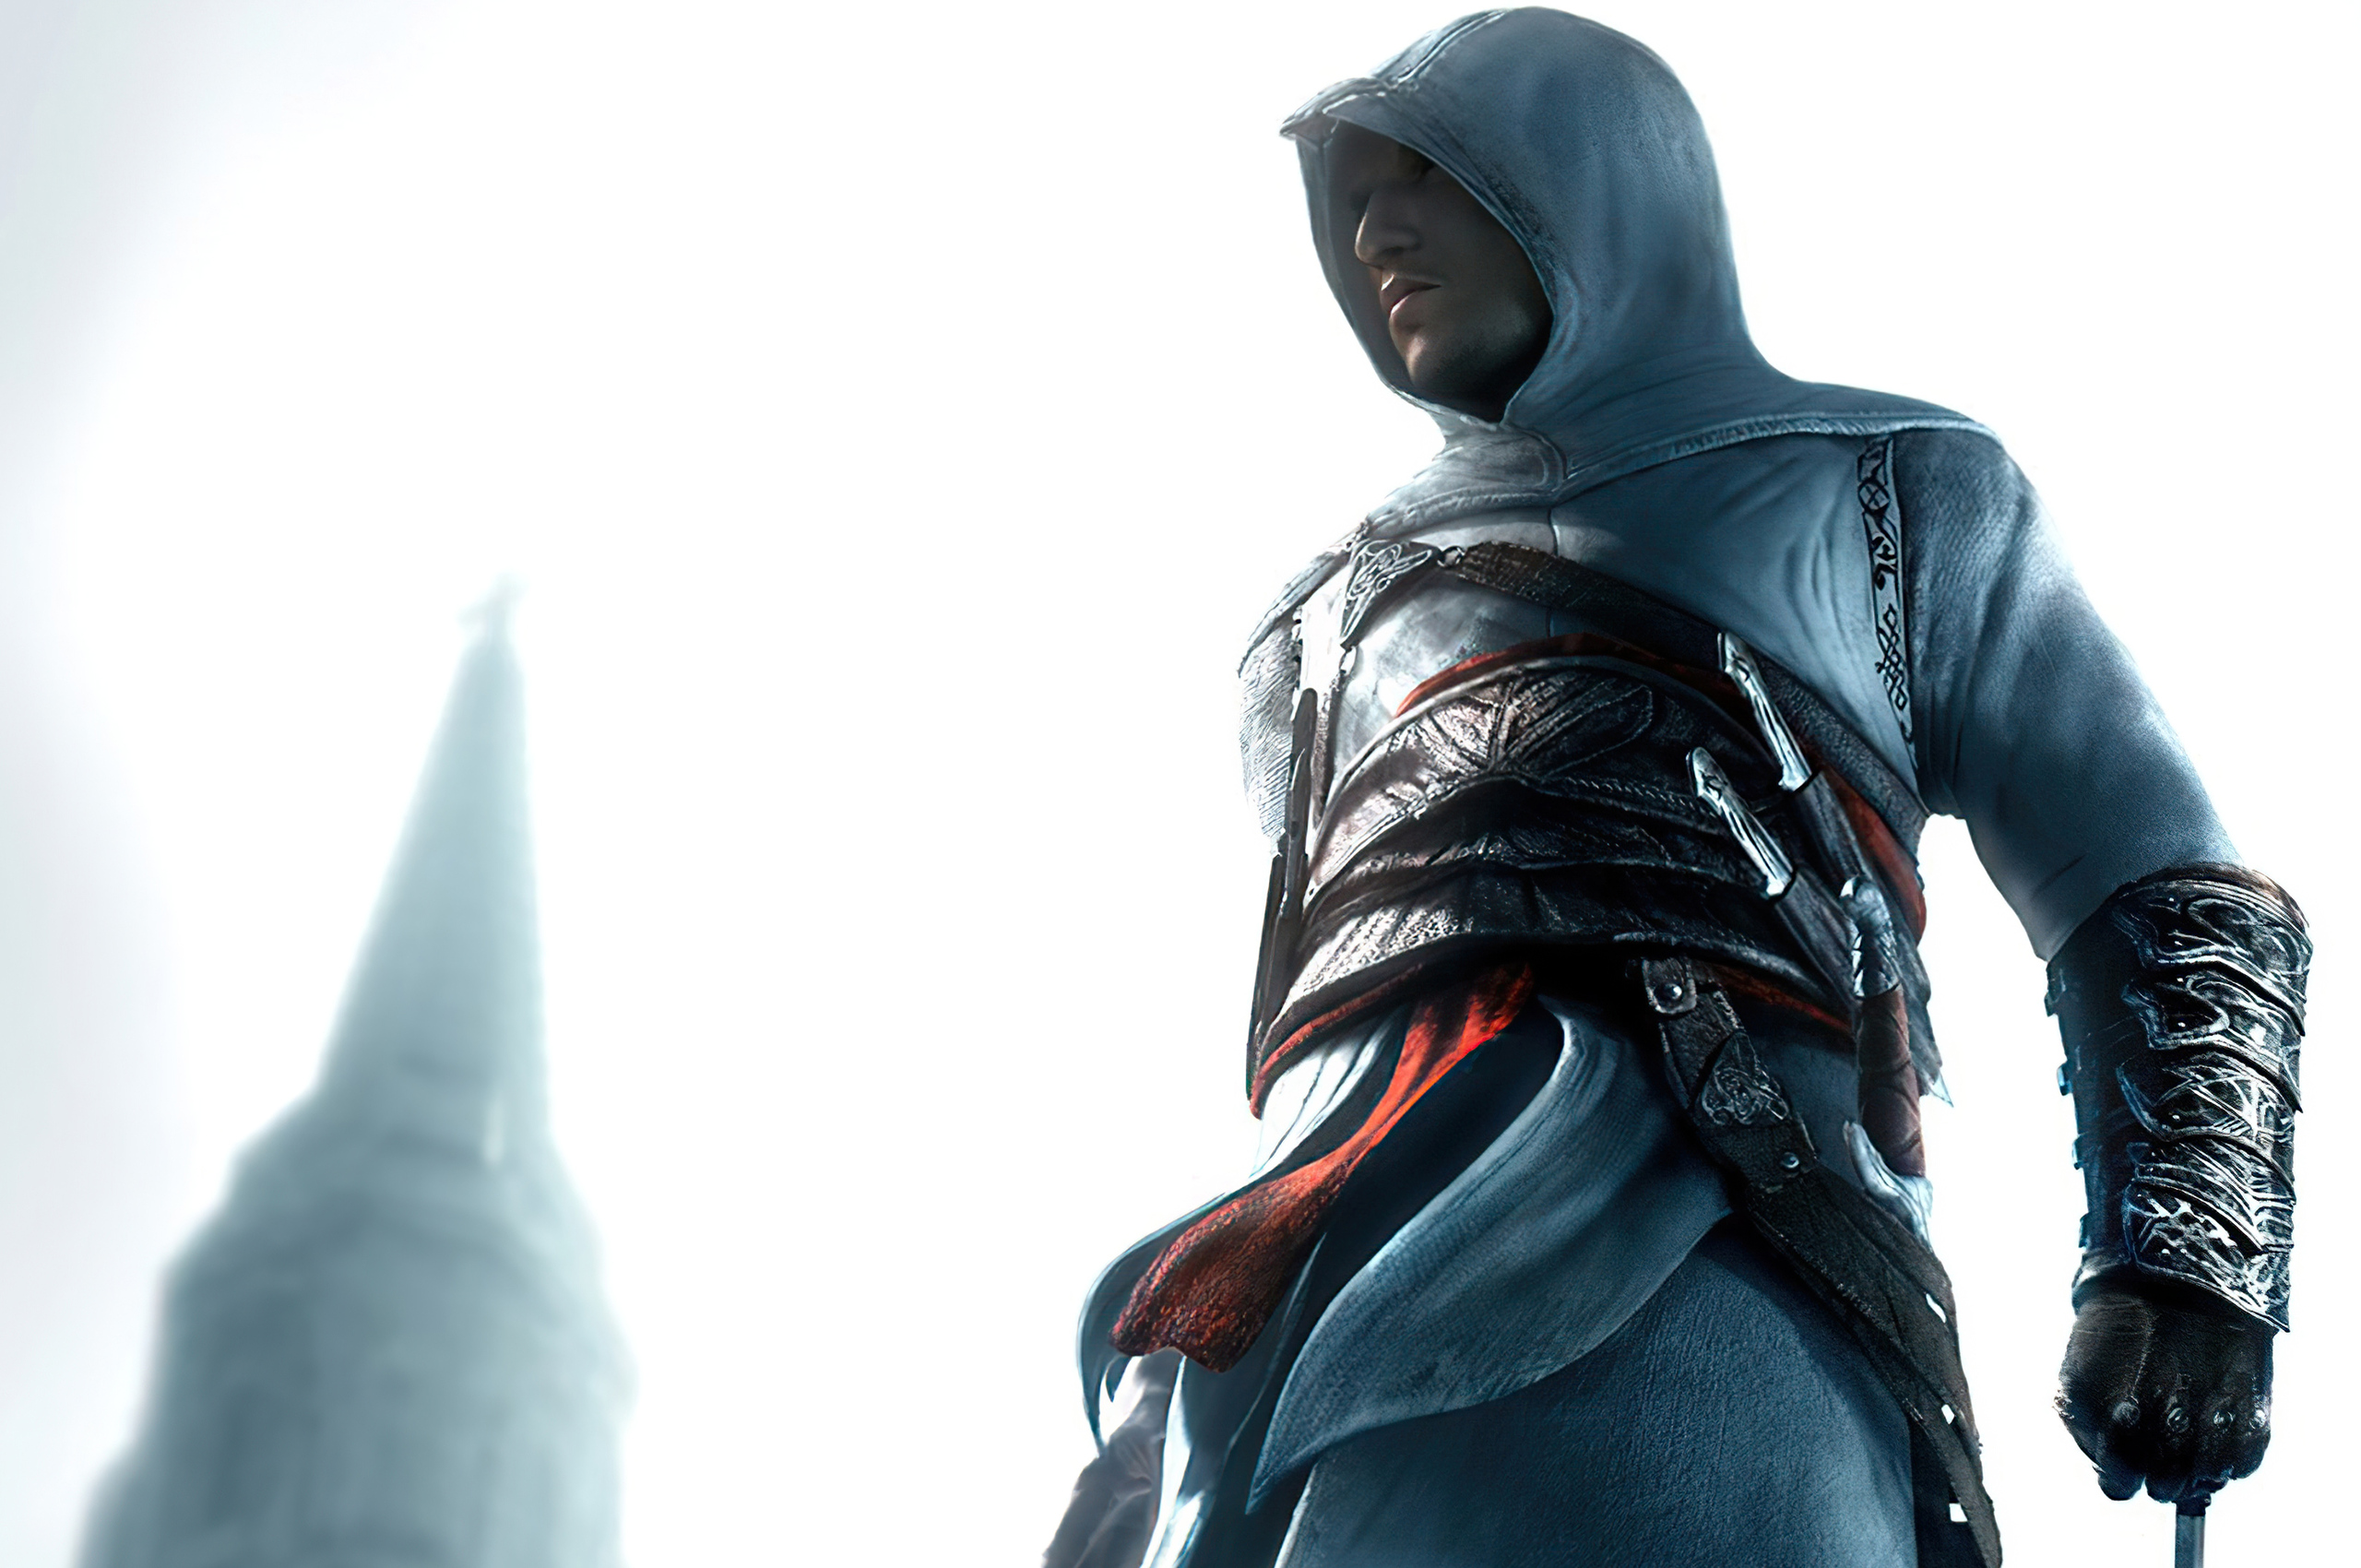 Ассасин крид человек. Самый первый ассасин. Assassin’s Creed (игра) 2007. Ассасин ориджинал. Assassin's Creed first.